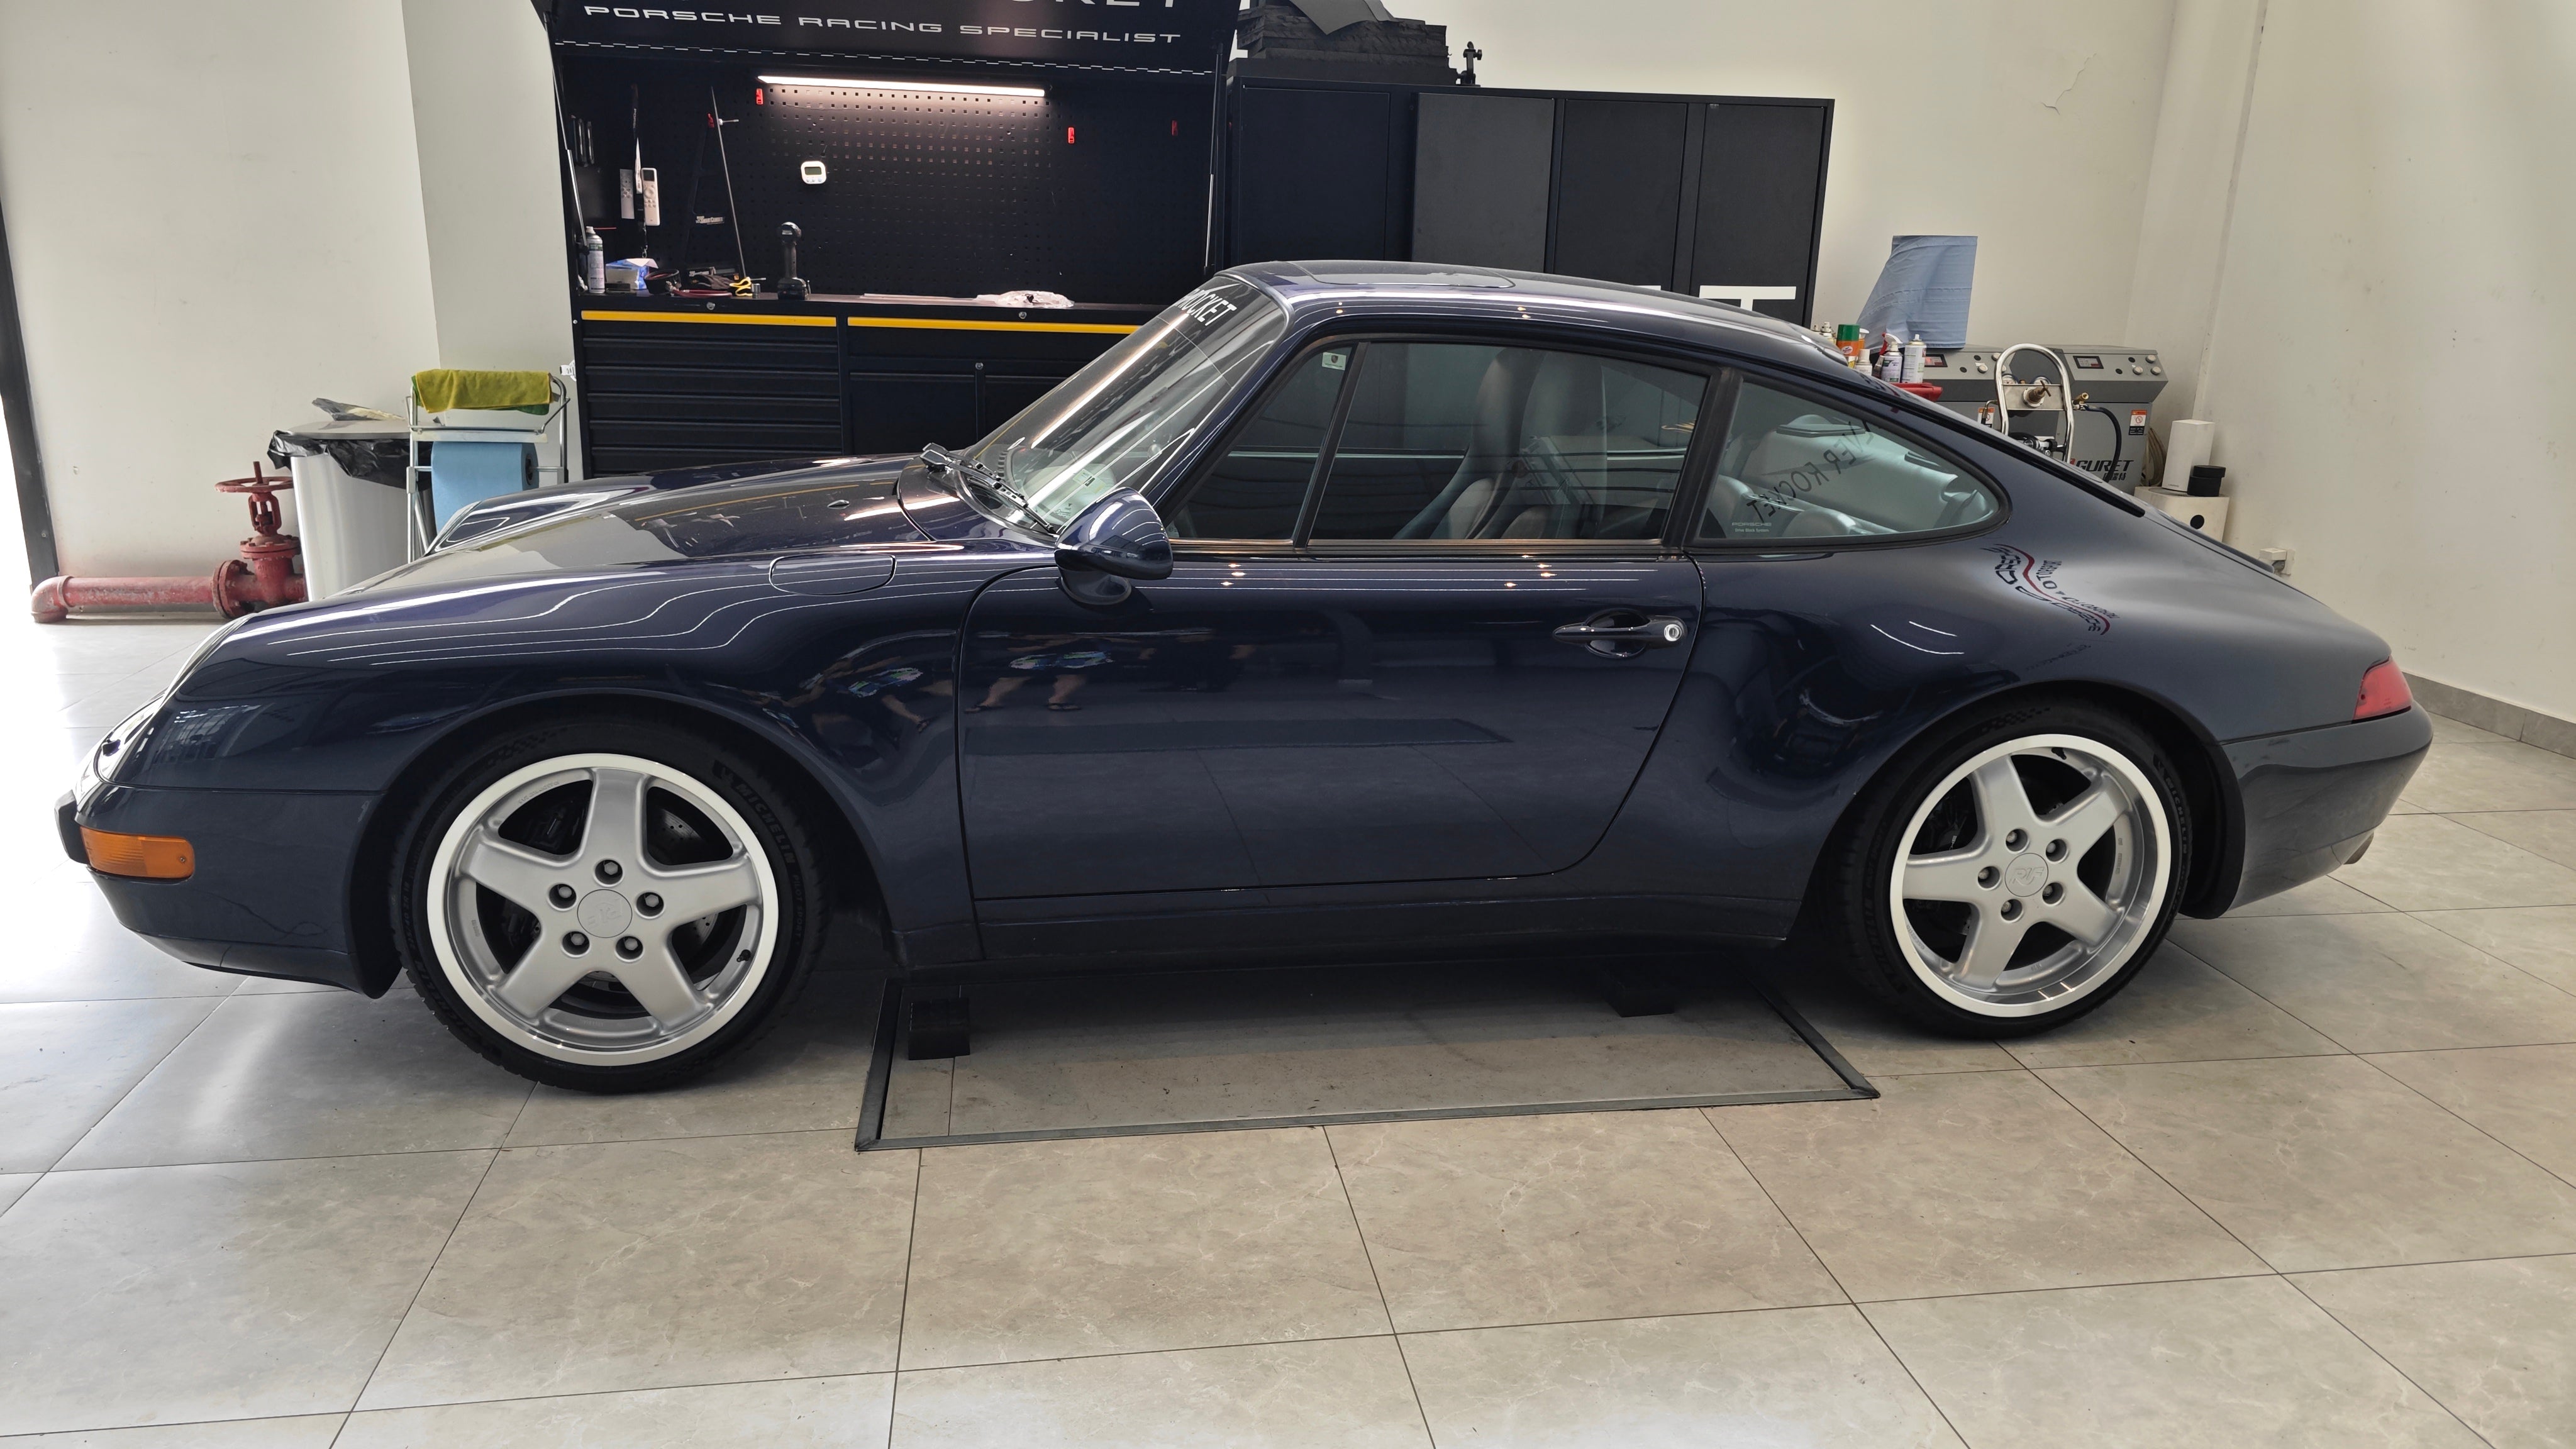 Restoring & Upgrading the Classic Porsche 993